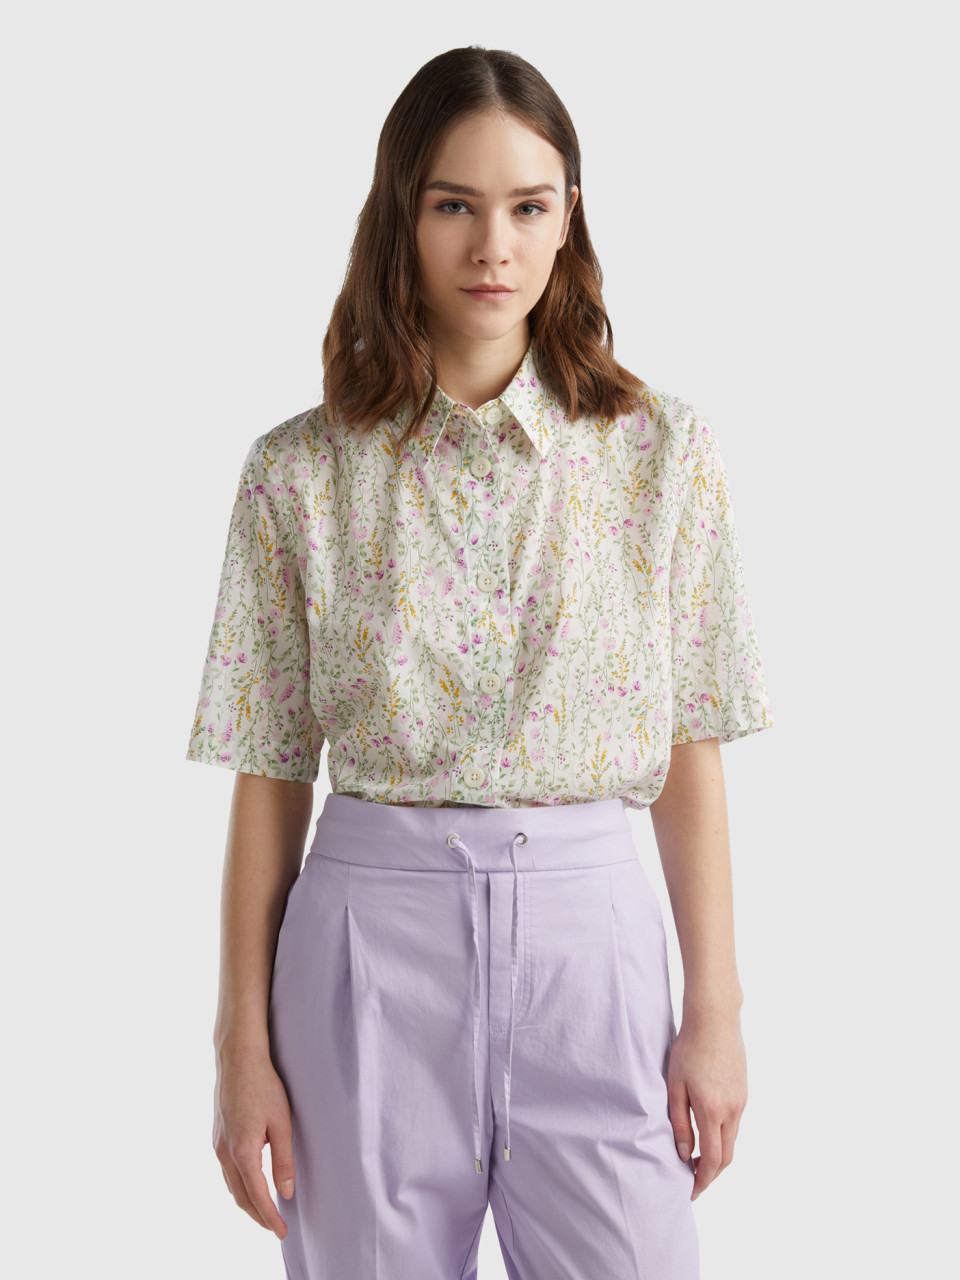 Benetton, Short Sleeve Patterned Shirt, Multi-color, Women